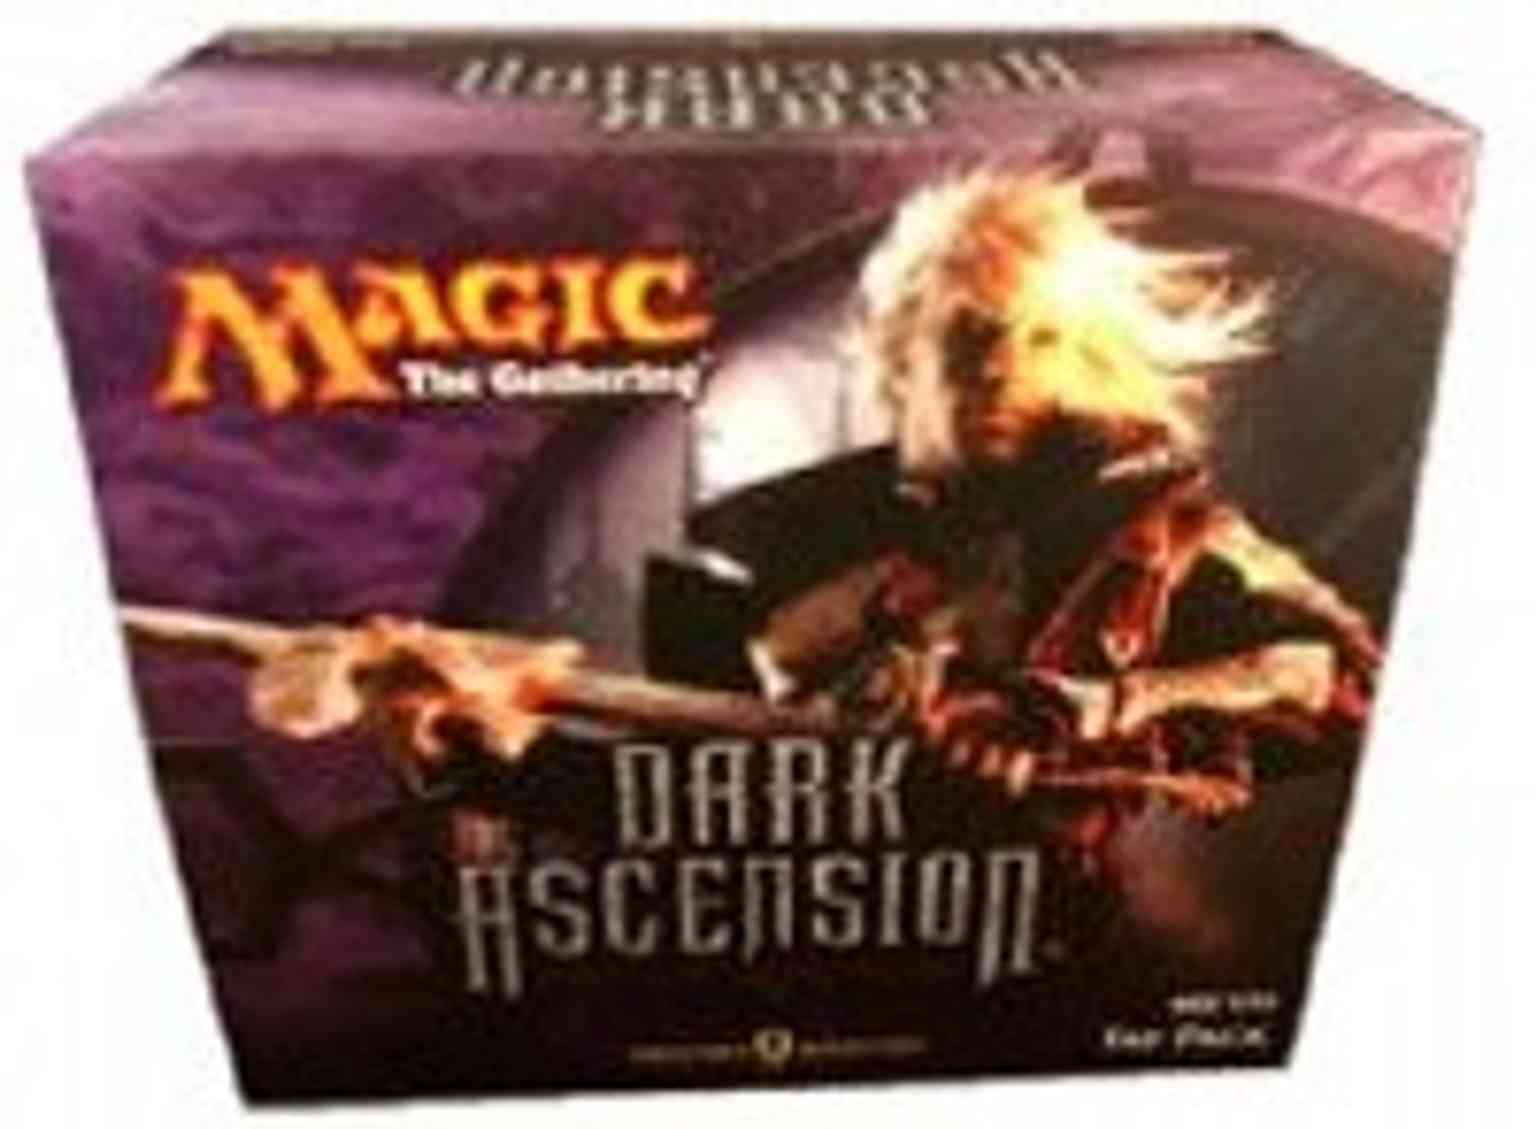 Dark Ascension - Fat Pack magic card front